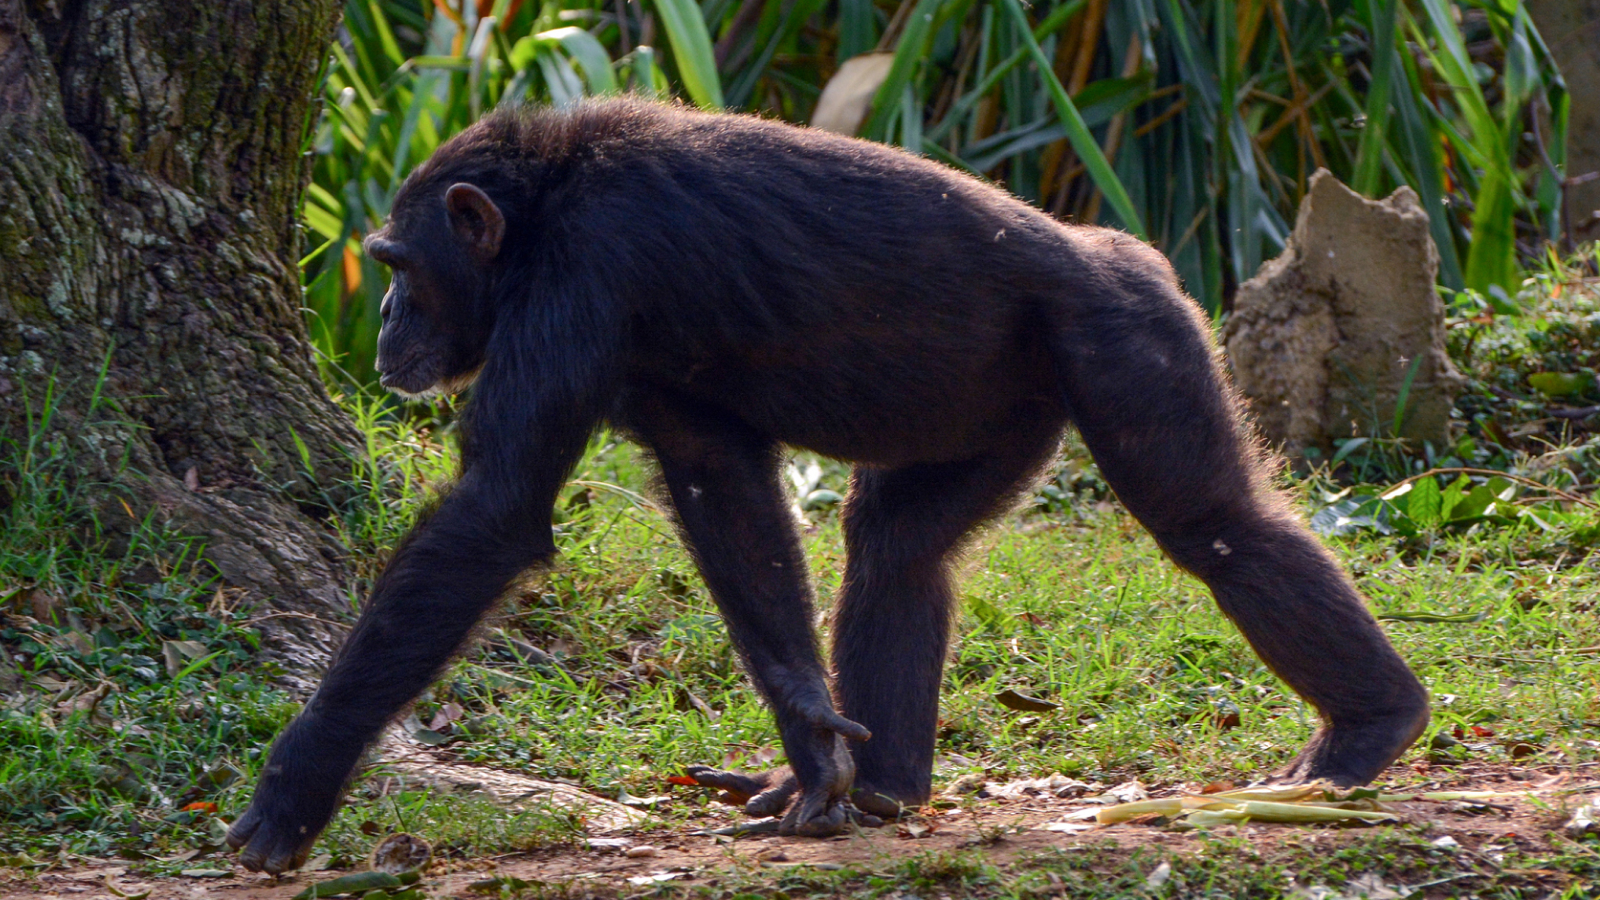 Common chimpanzee walking on four legs, roaming wild in the Entebbe zoo (Wildlife Education Center)